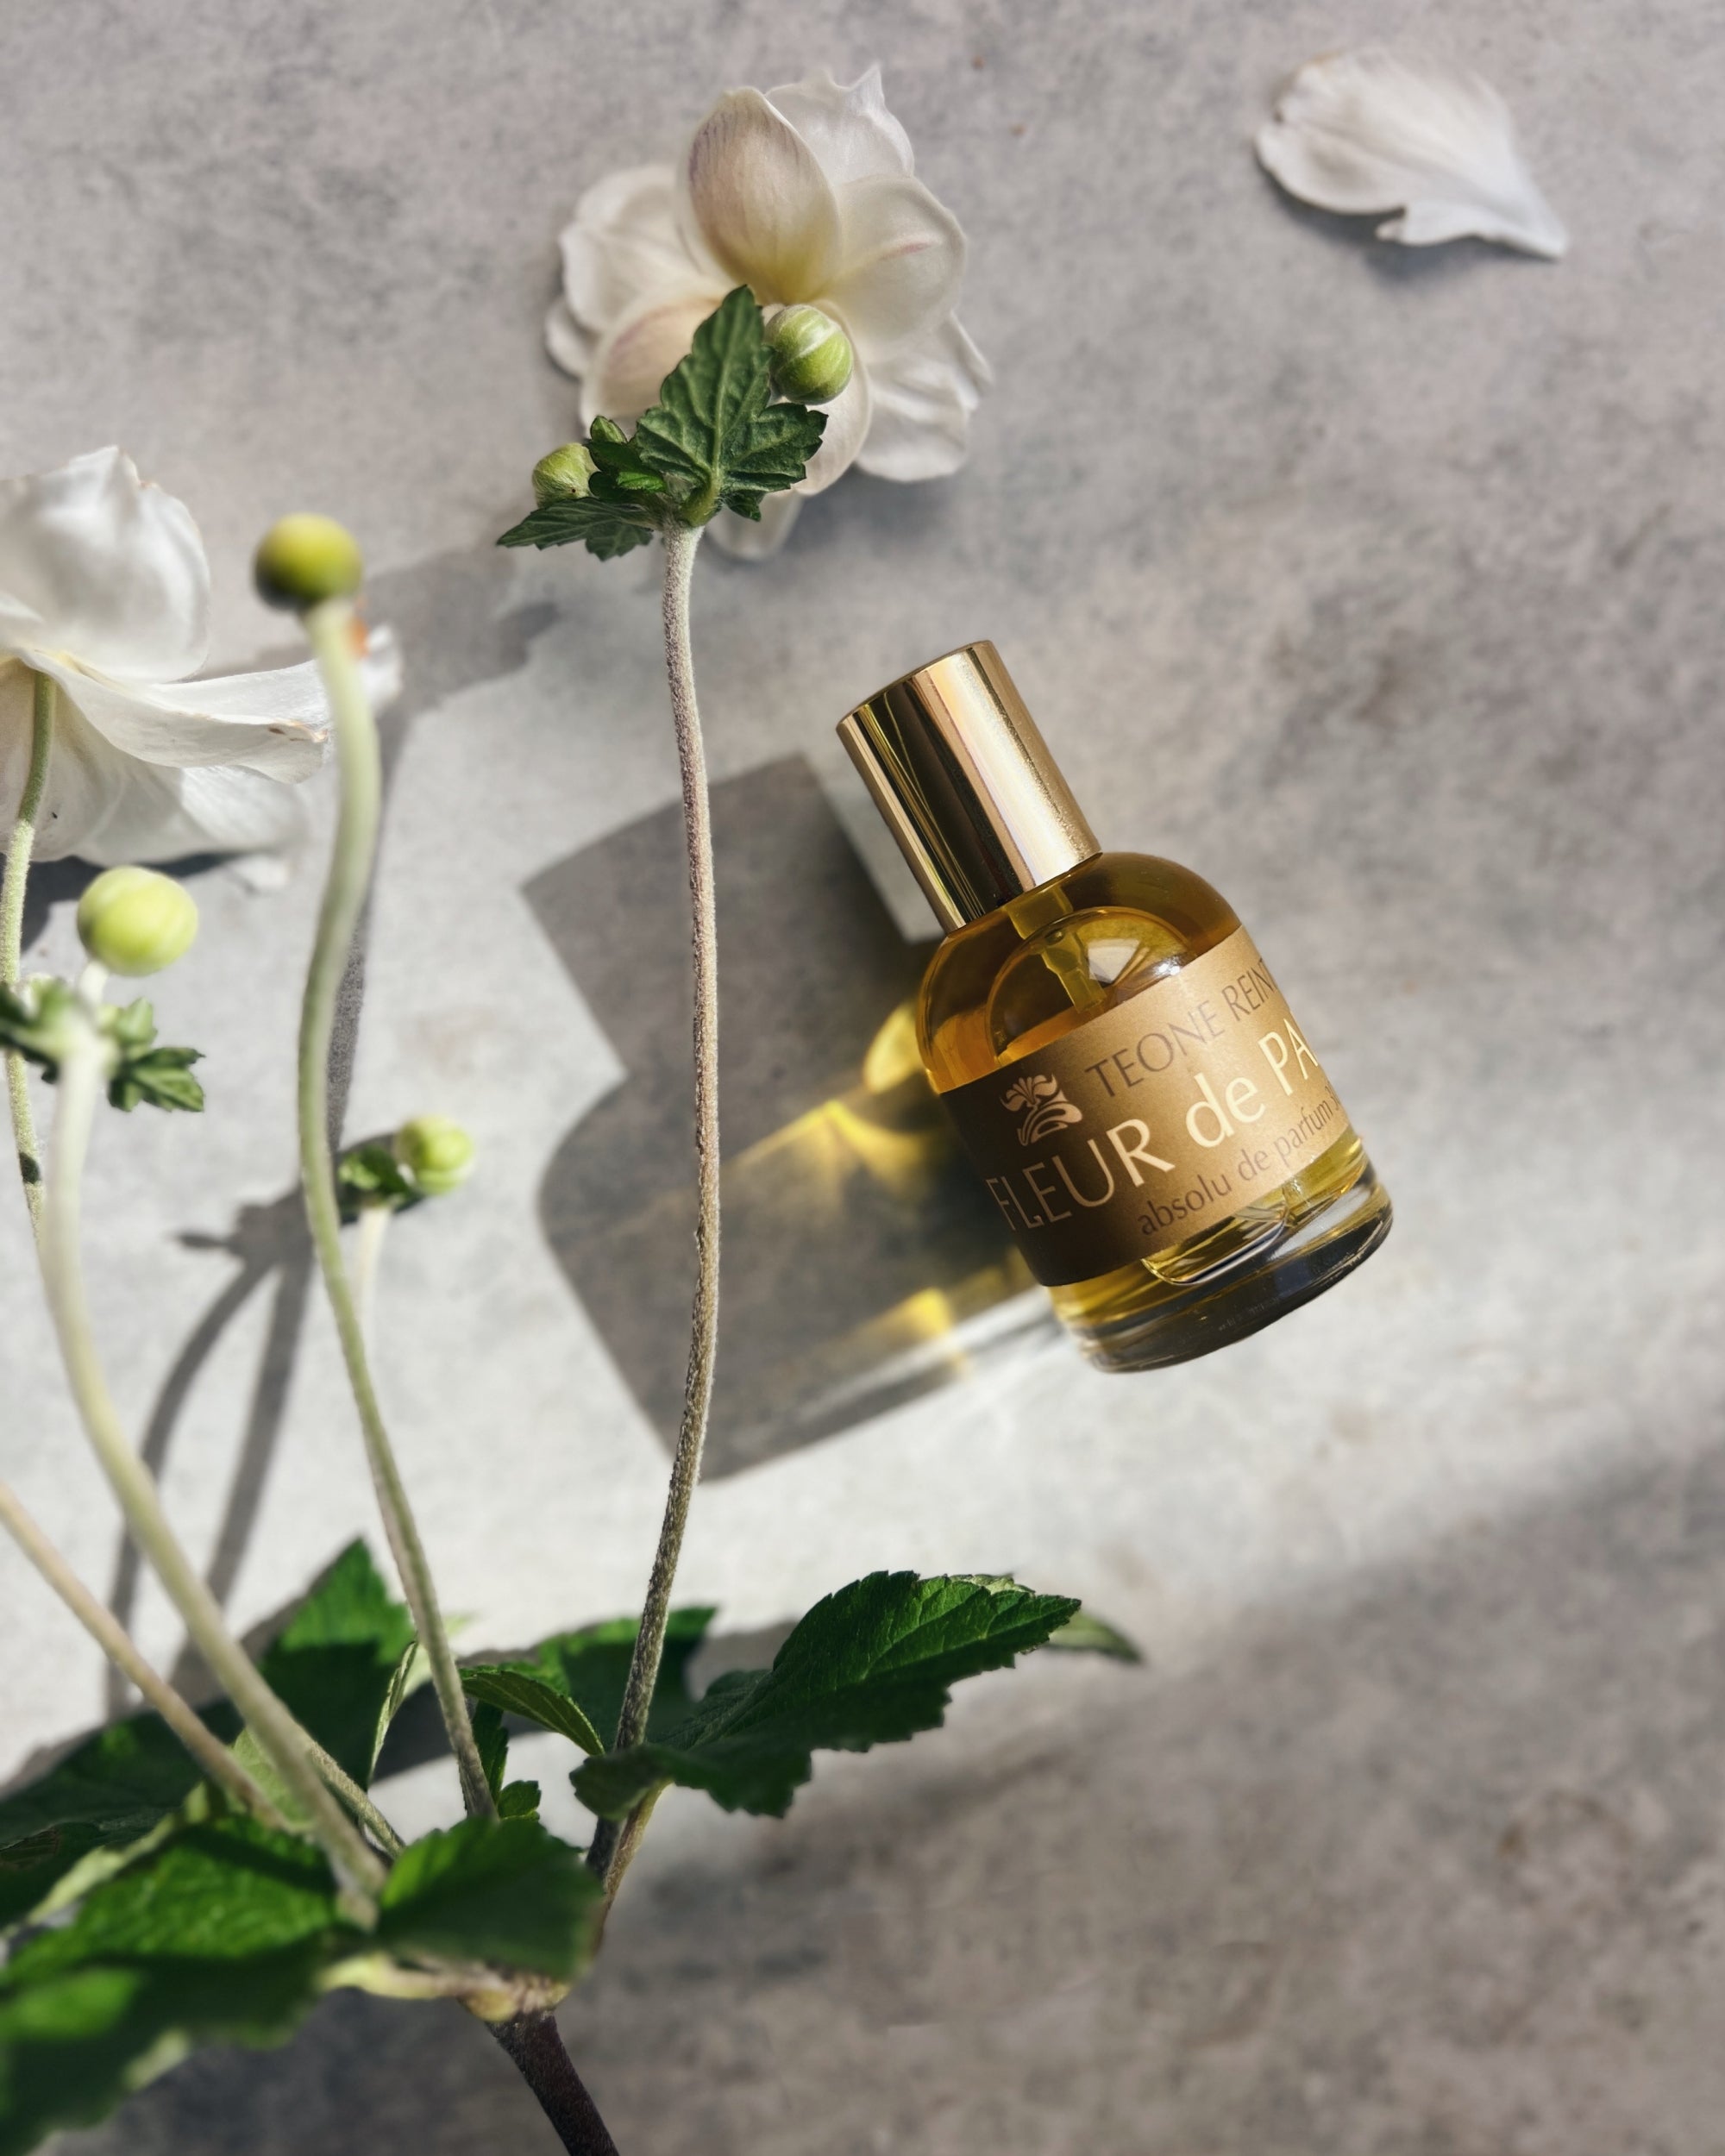 Teone Reinthal perfume : fleur de paradis